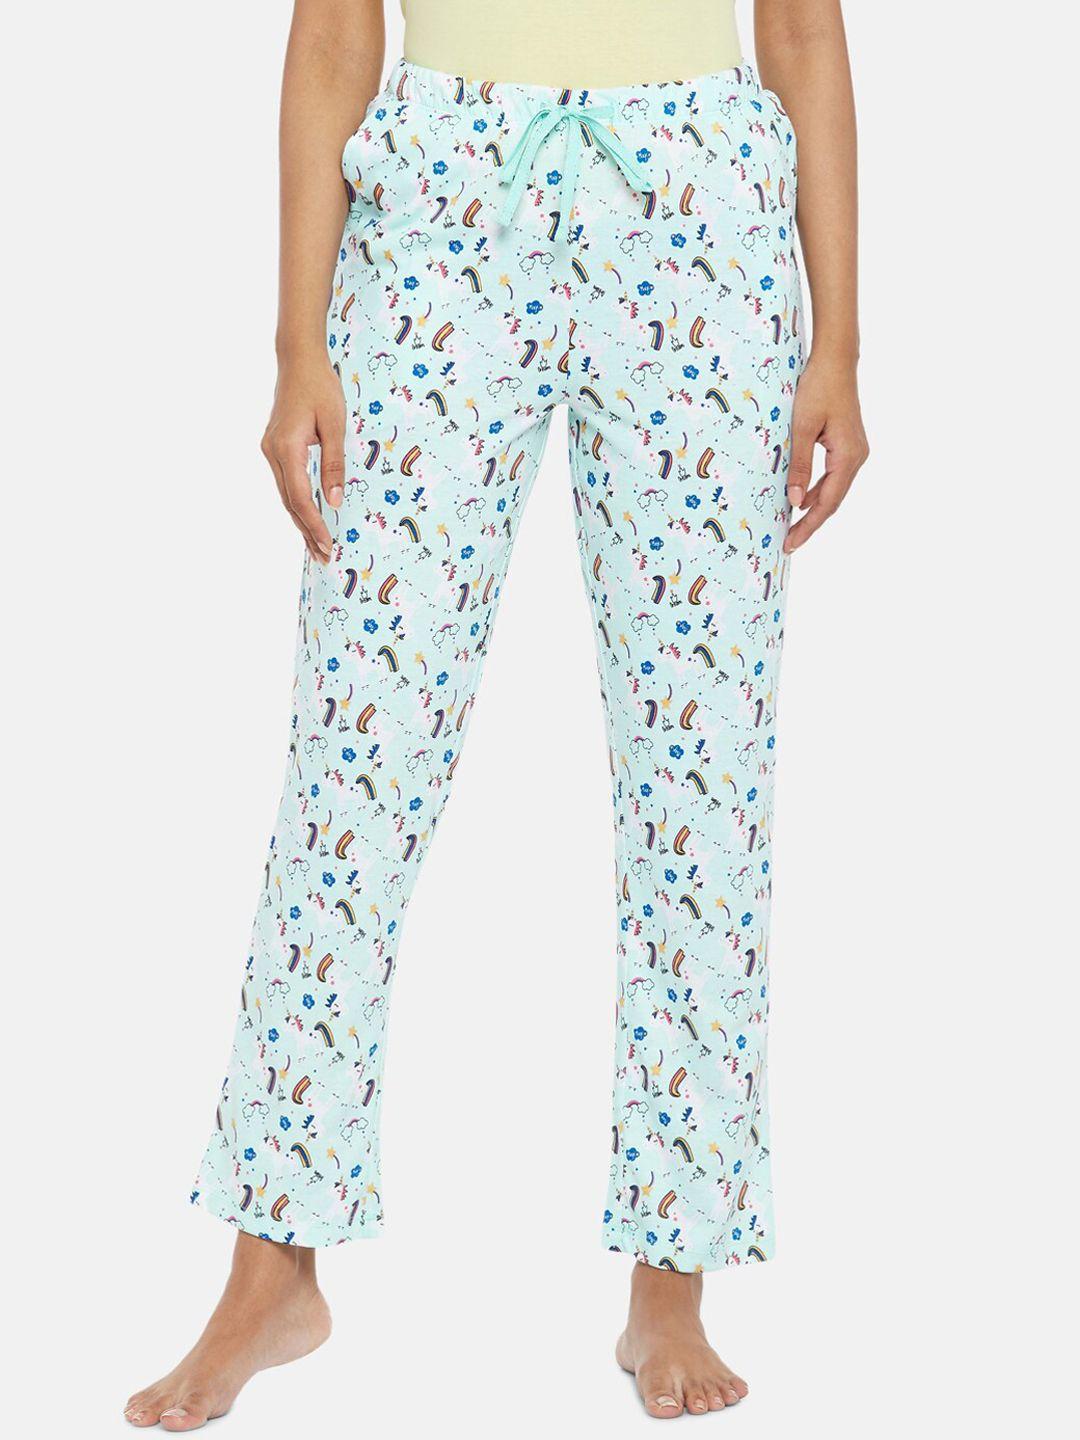 dreamz by pantaloons women blue printed pyjamas